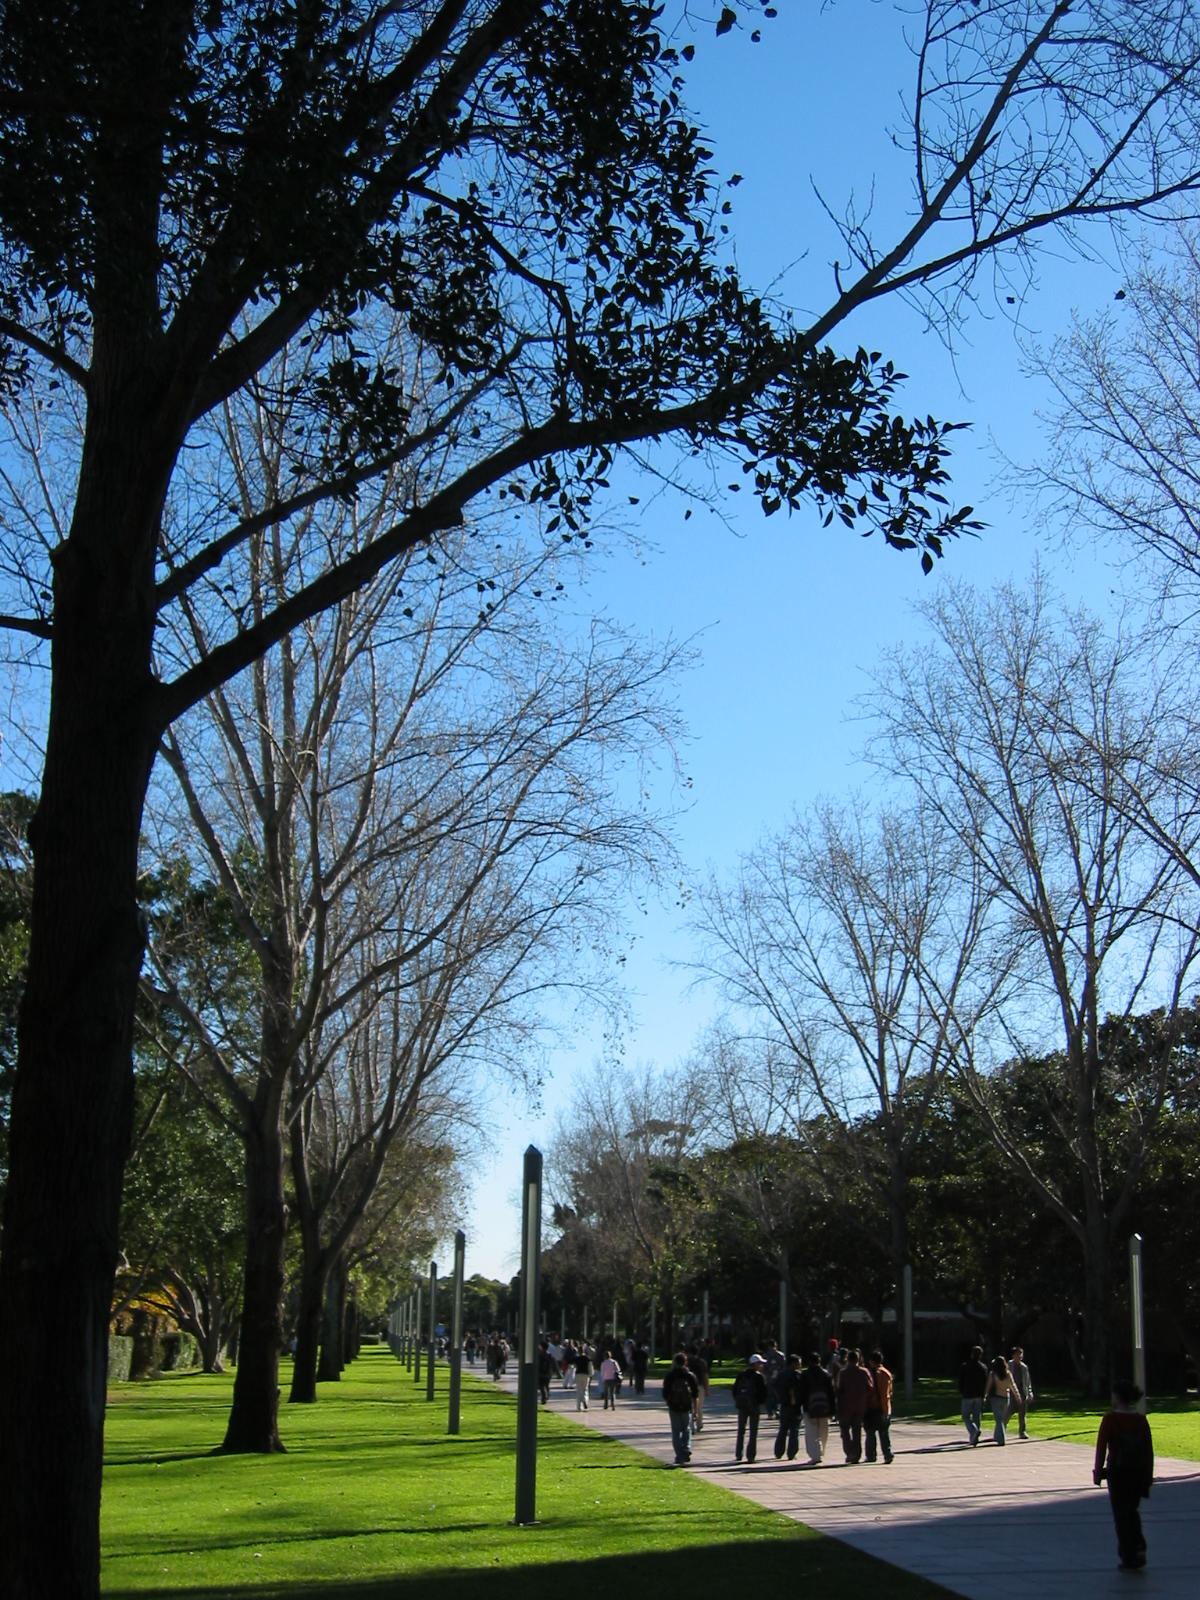 Main walkway on lower campus